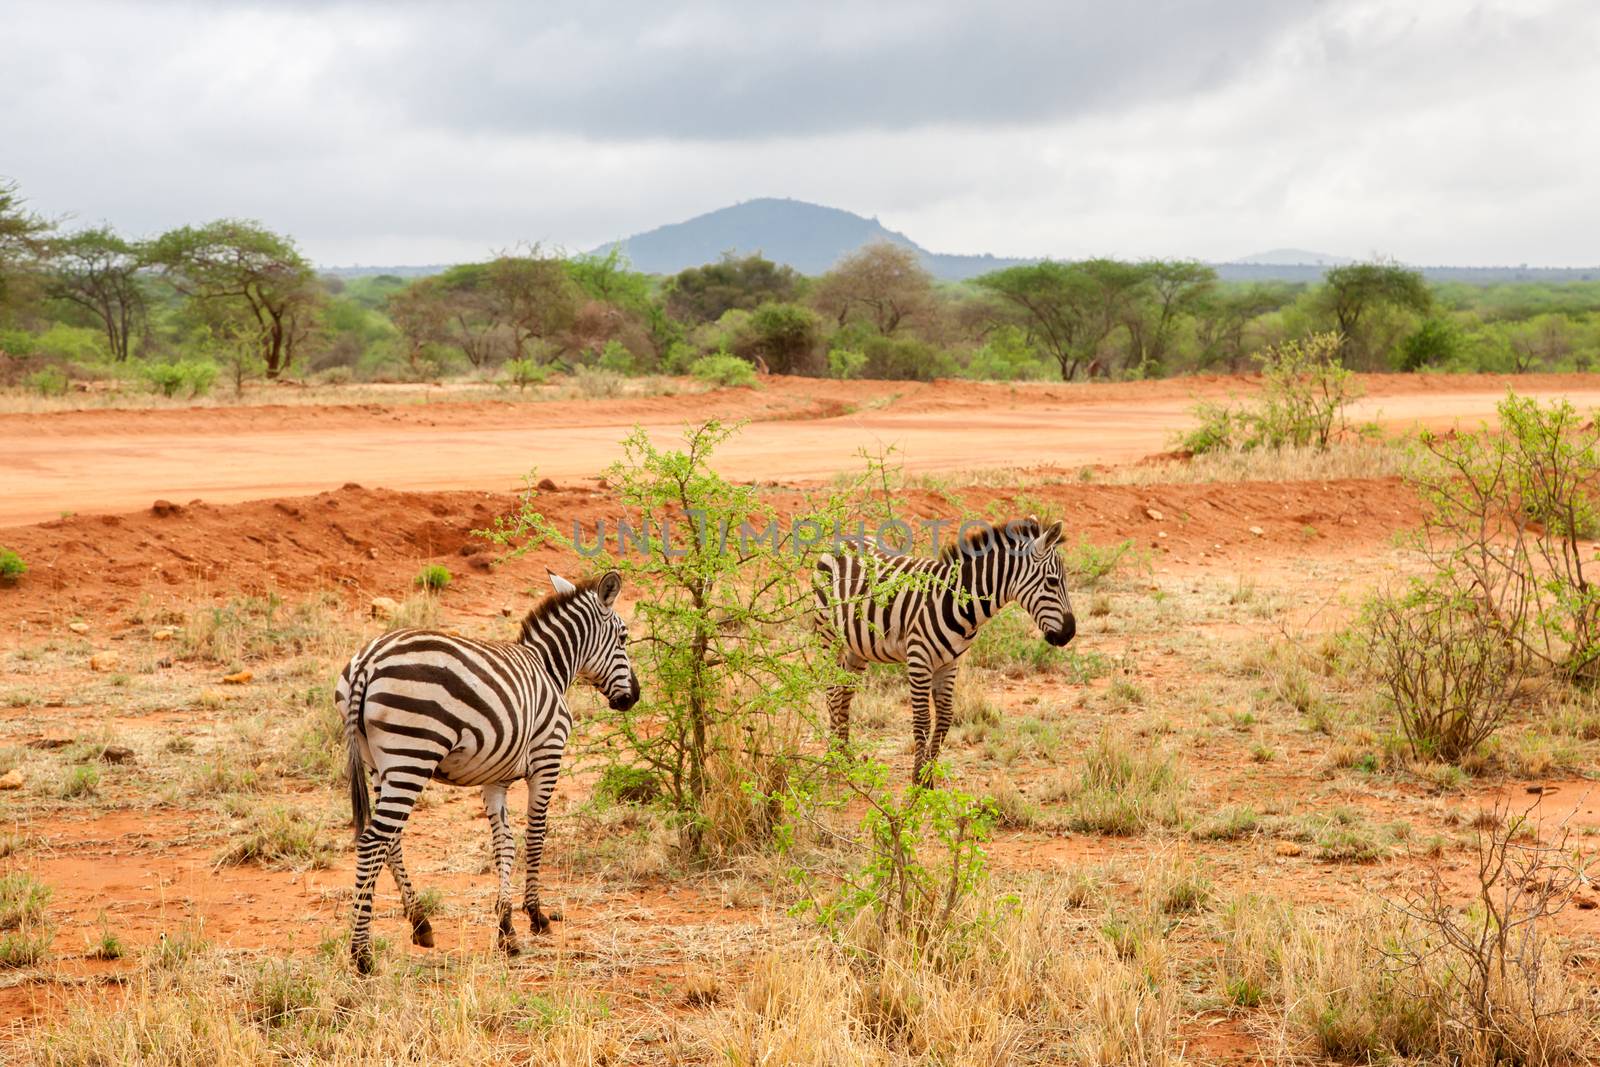 Zebras walking away, scenery of Kenya by 25ehaag6